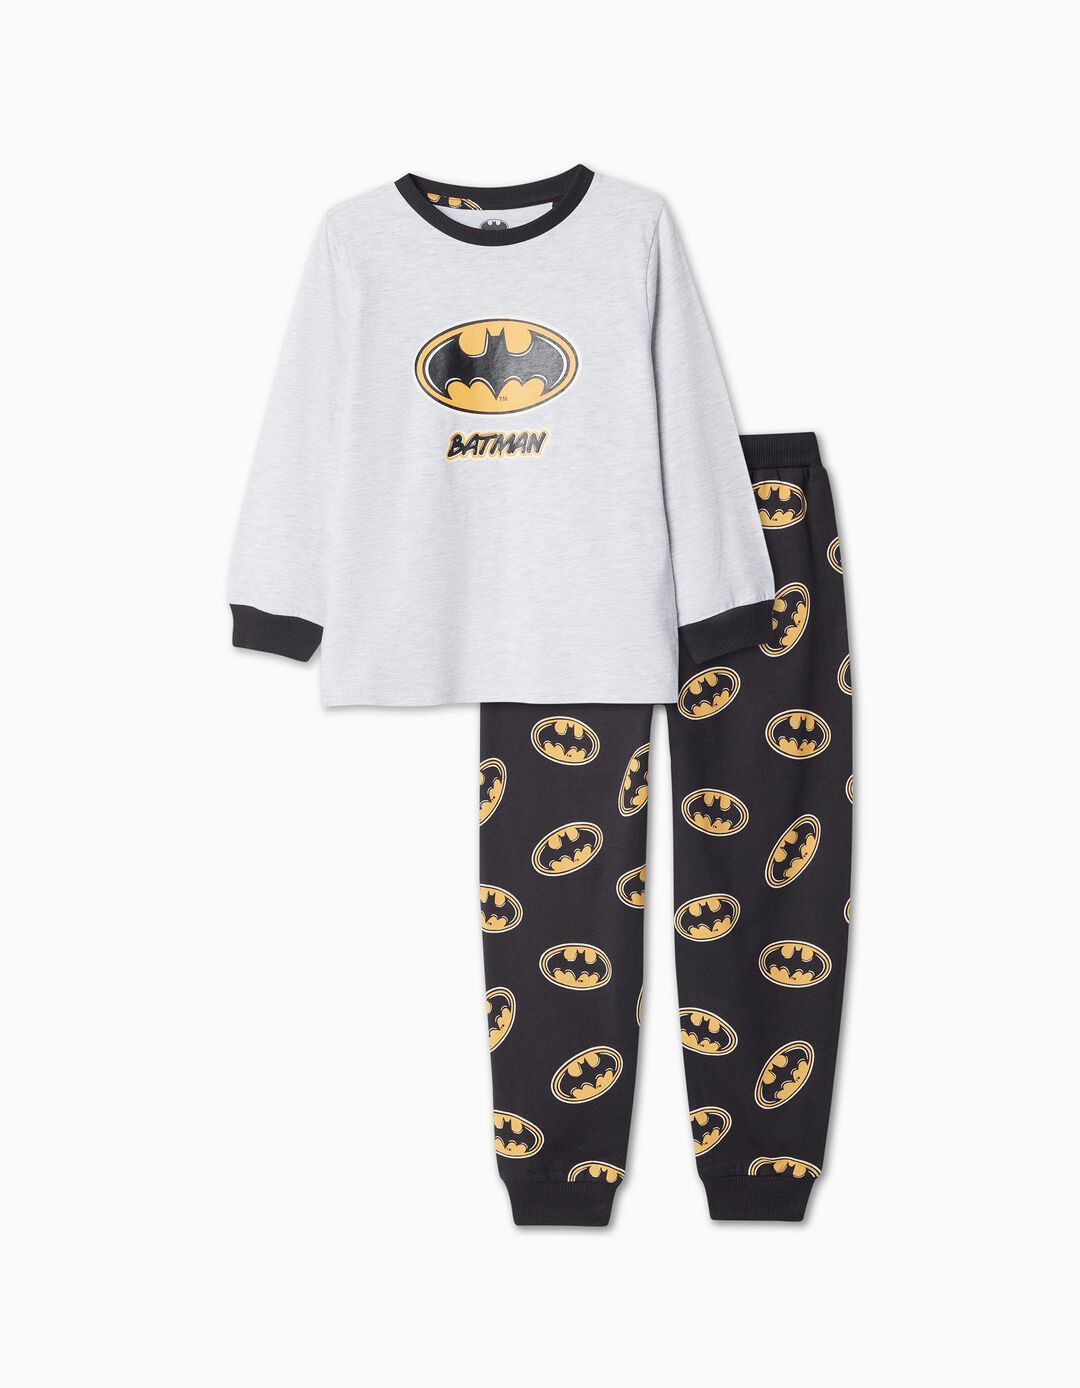 Pijama 'Batman', Menino, Multicor